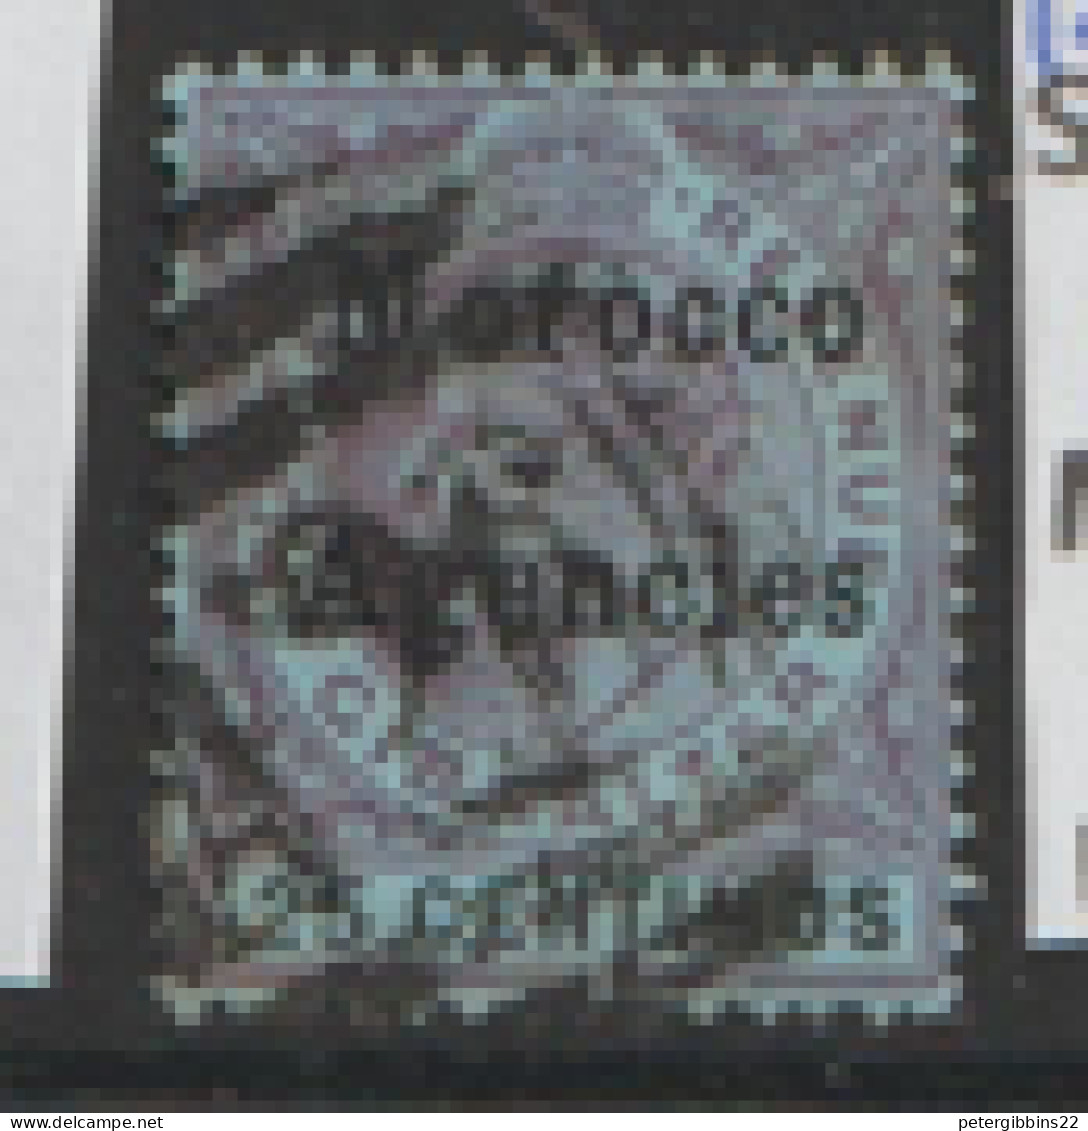 Morocco Agencies Gibraltar Issues  1899  SG 12  25c  Fine Used - Bureaux Au Maroc / Tanger (...-1958)